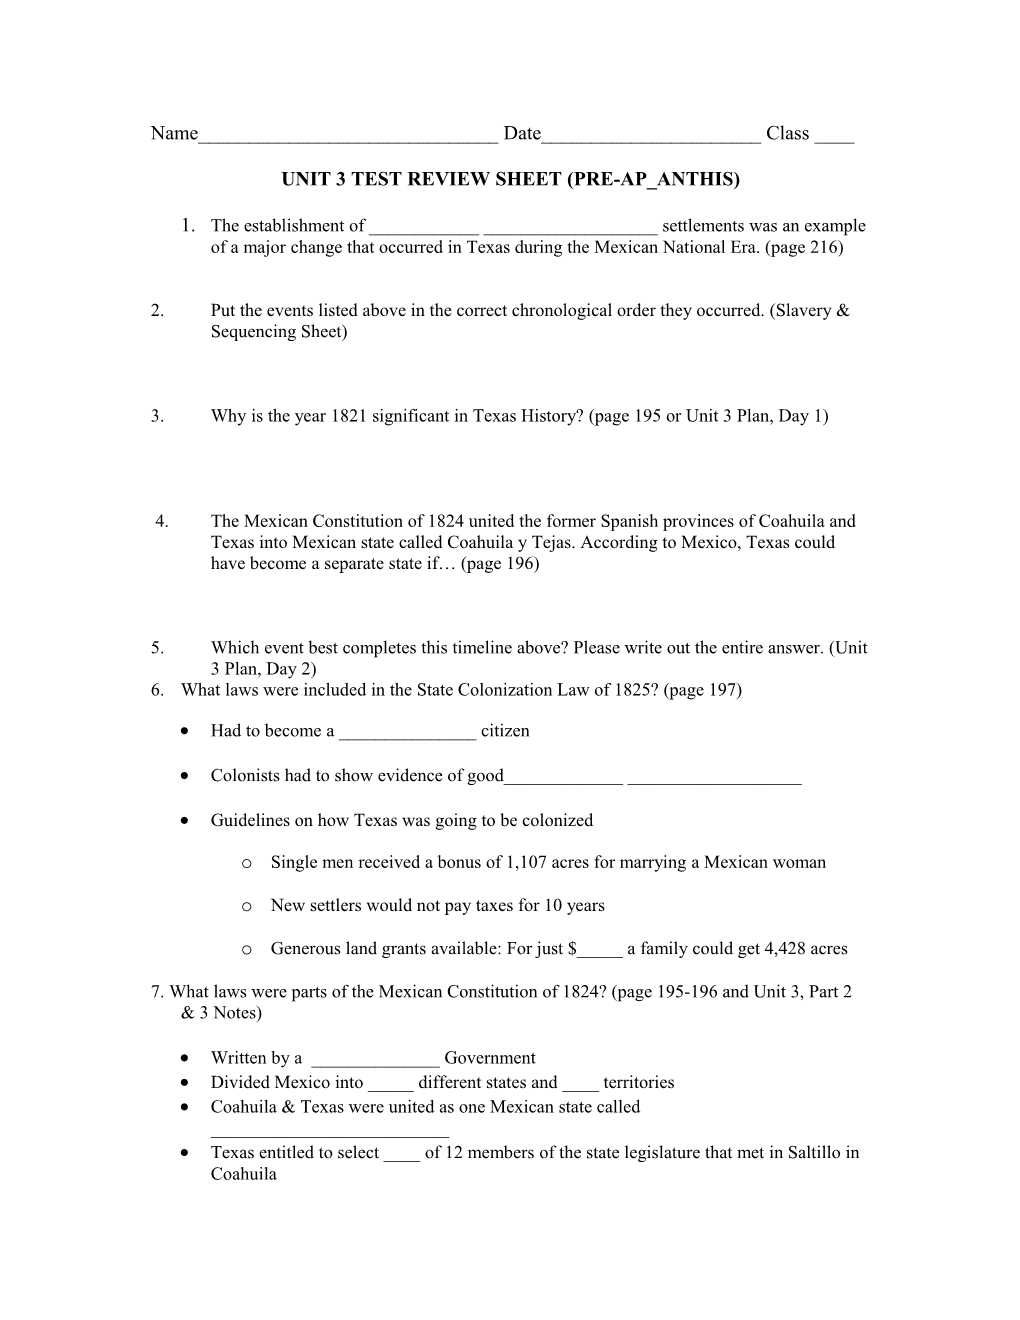 Unit 3 Test Review Sheet (Pre-Ap Anthis)